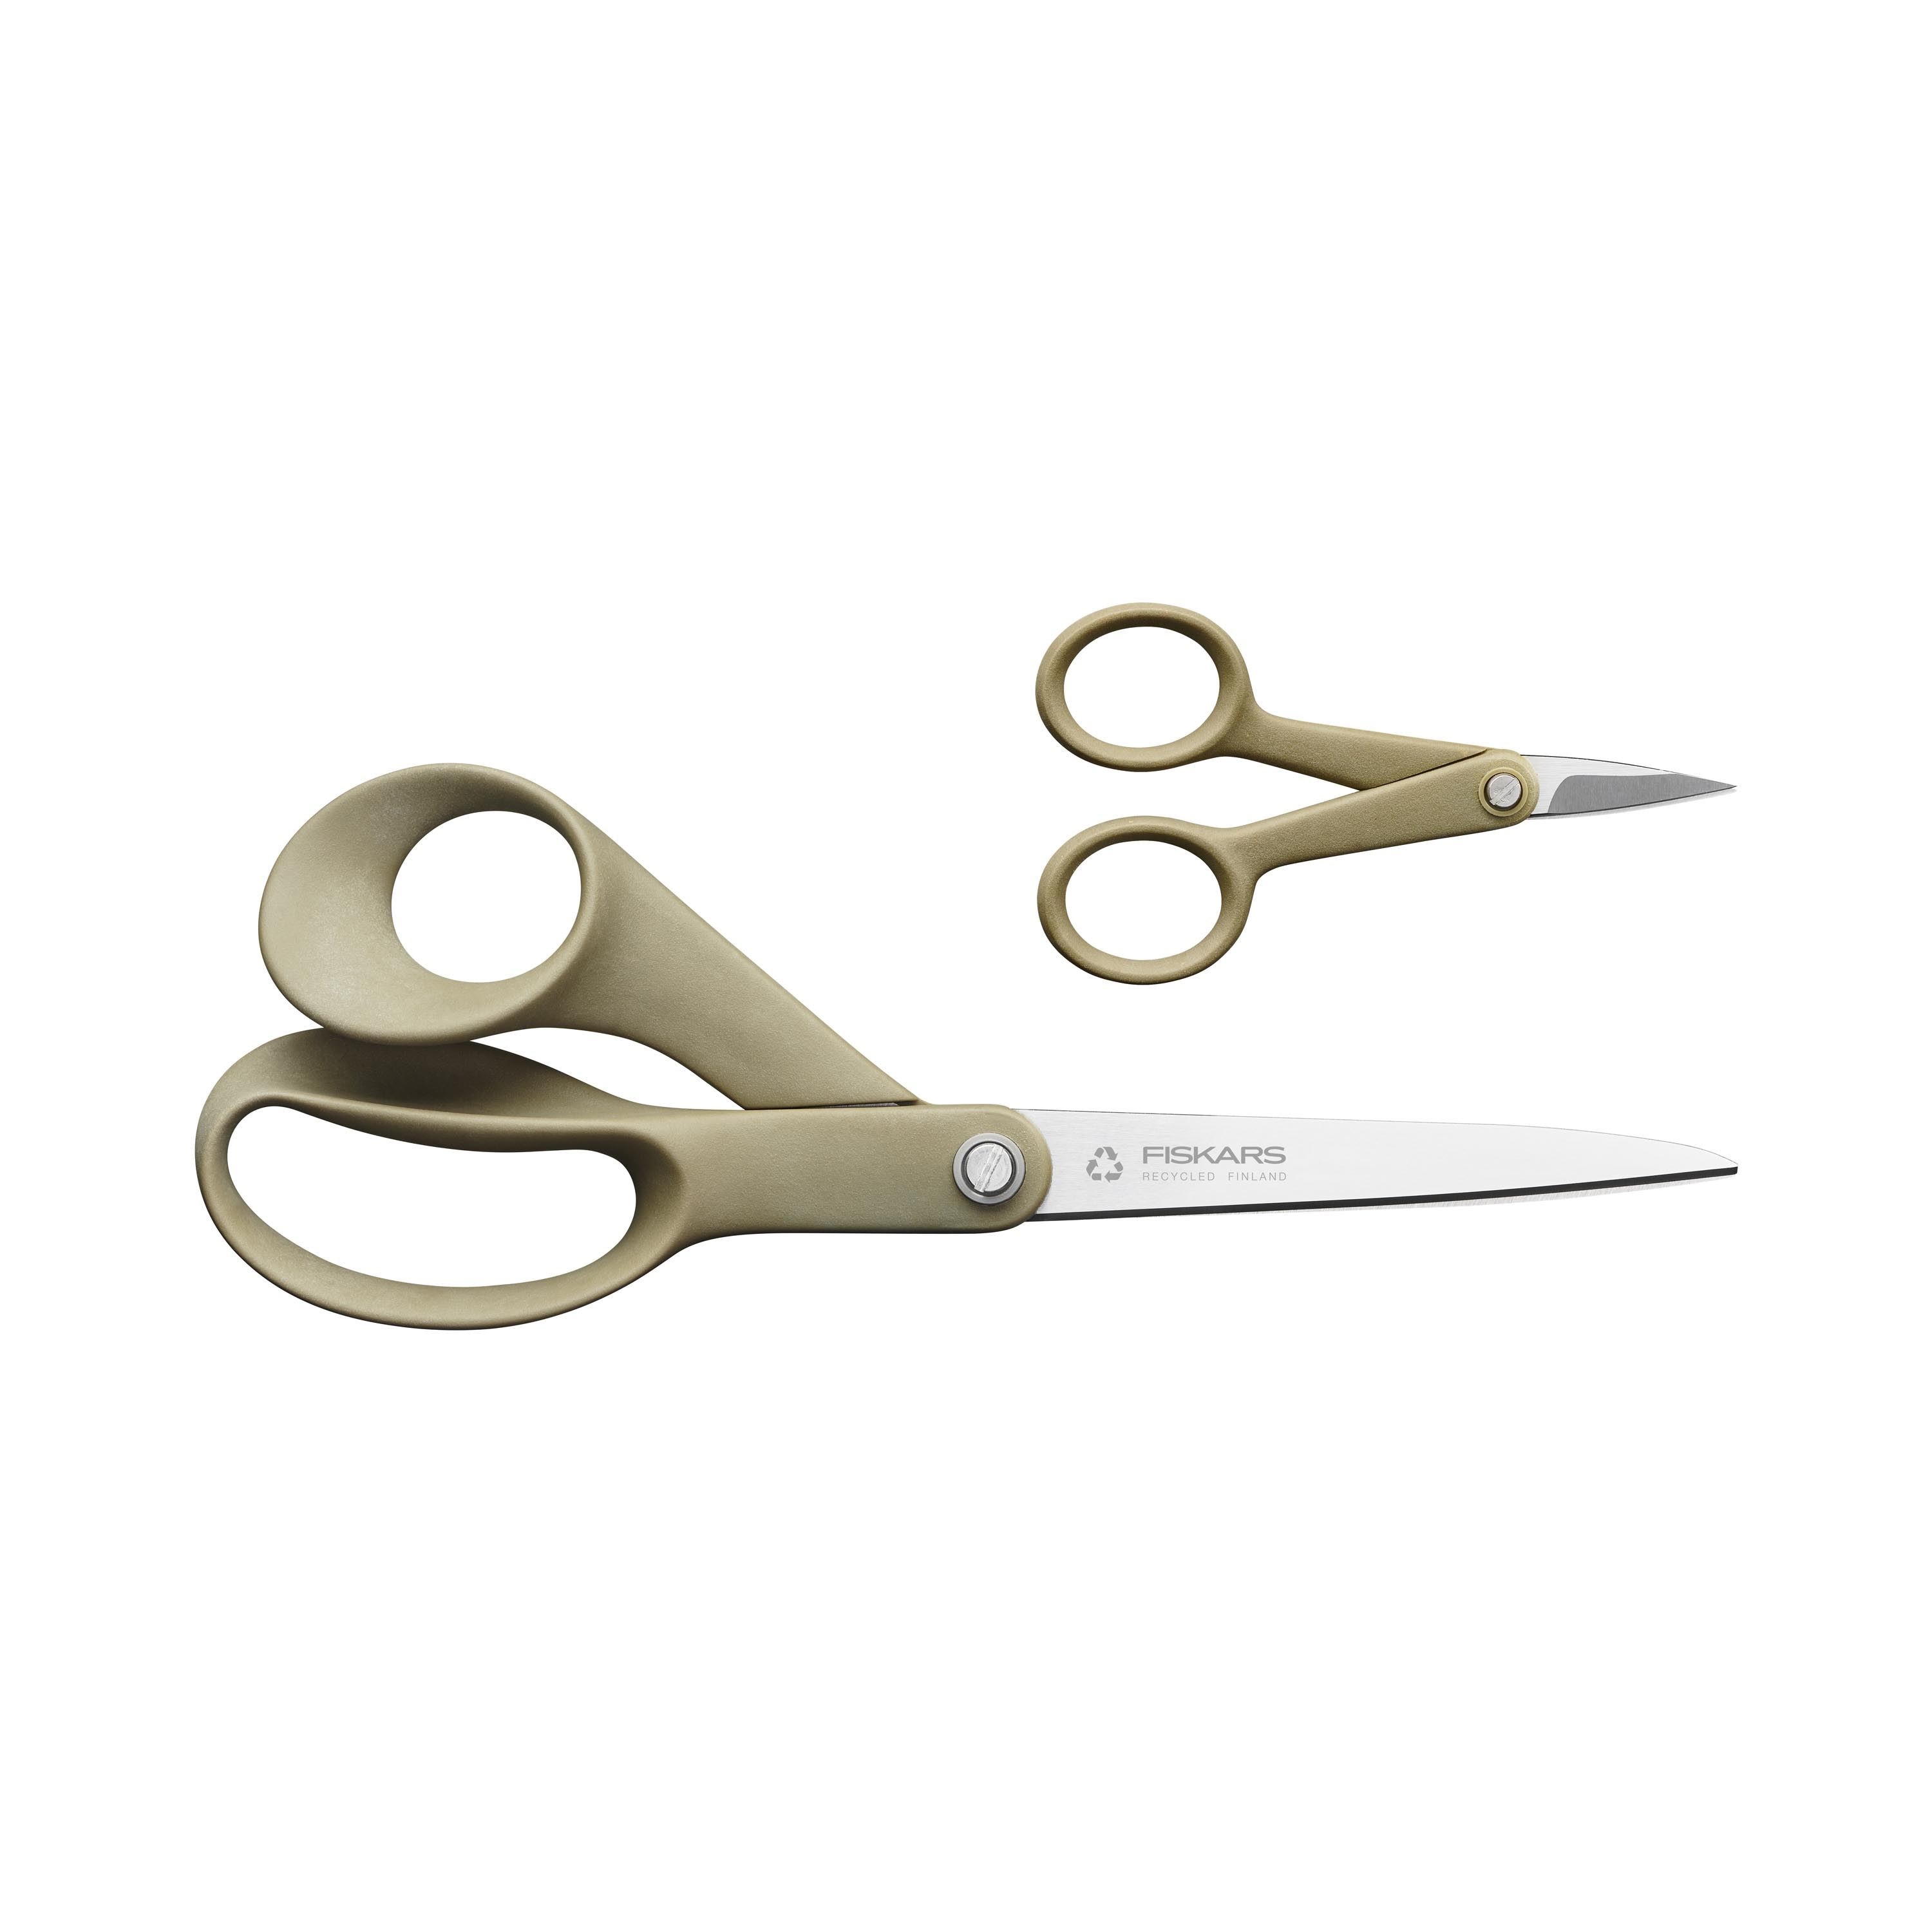  Fiskars Gingher 220030-1001 Pocket Scissors, 4-Inch, Industrial  Pack, Silver : Arts, Crafts & Sewing